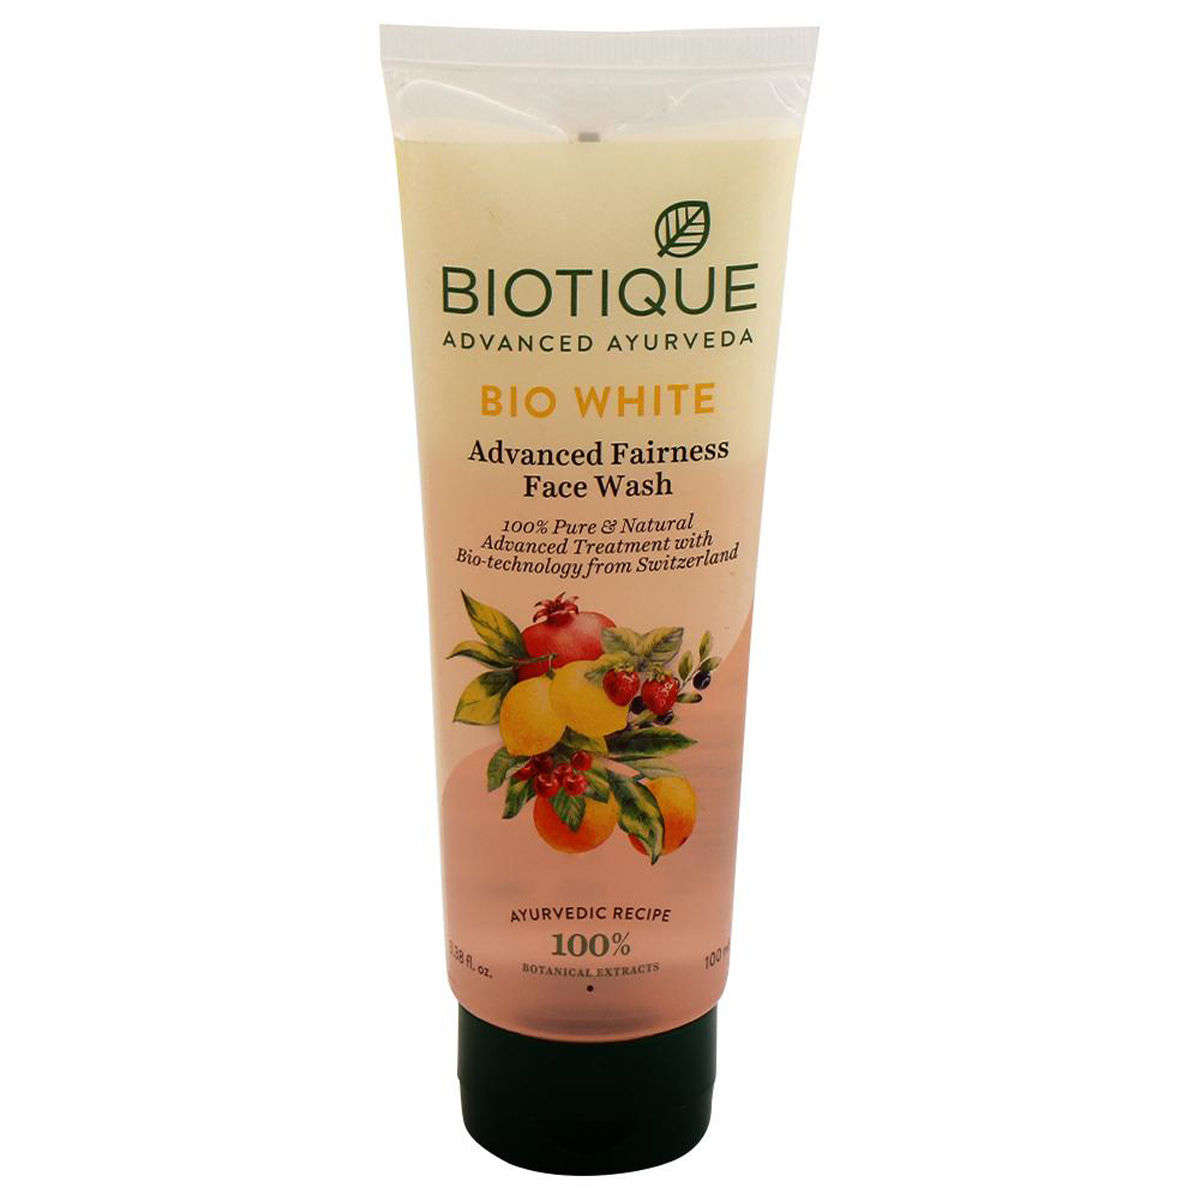 Biotique Bio White Advanced Fairness Face Wash, 50 ml, Pack of 1 